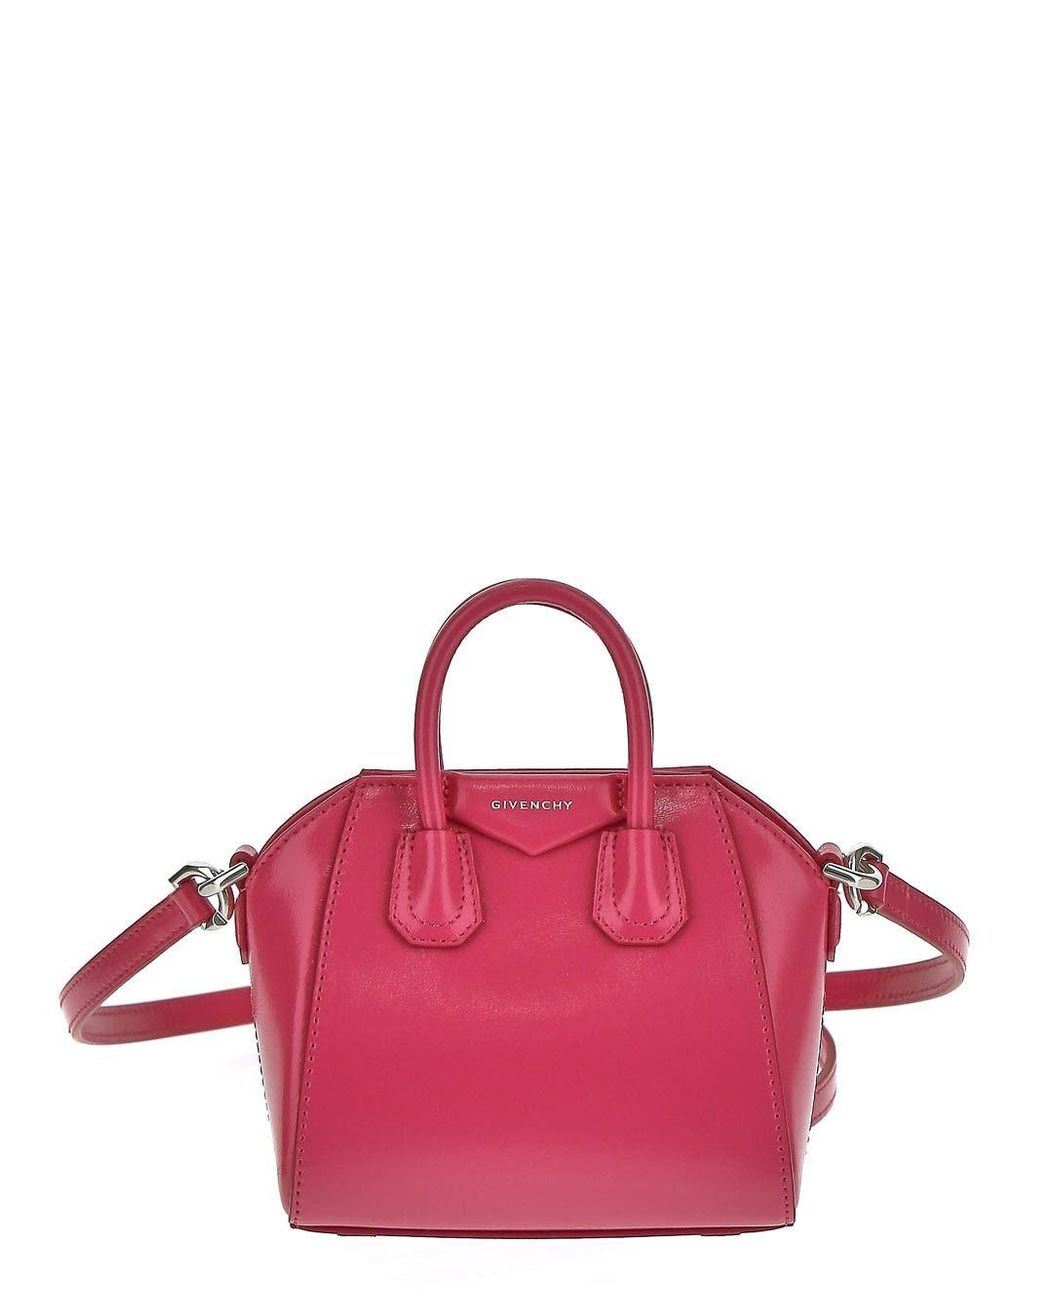 Givenchy Antigona Micro Bag in Pink | Lyst UK